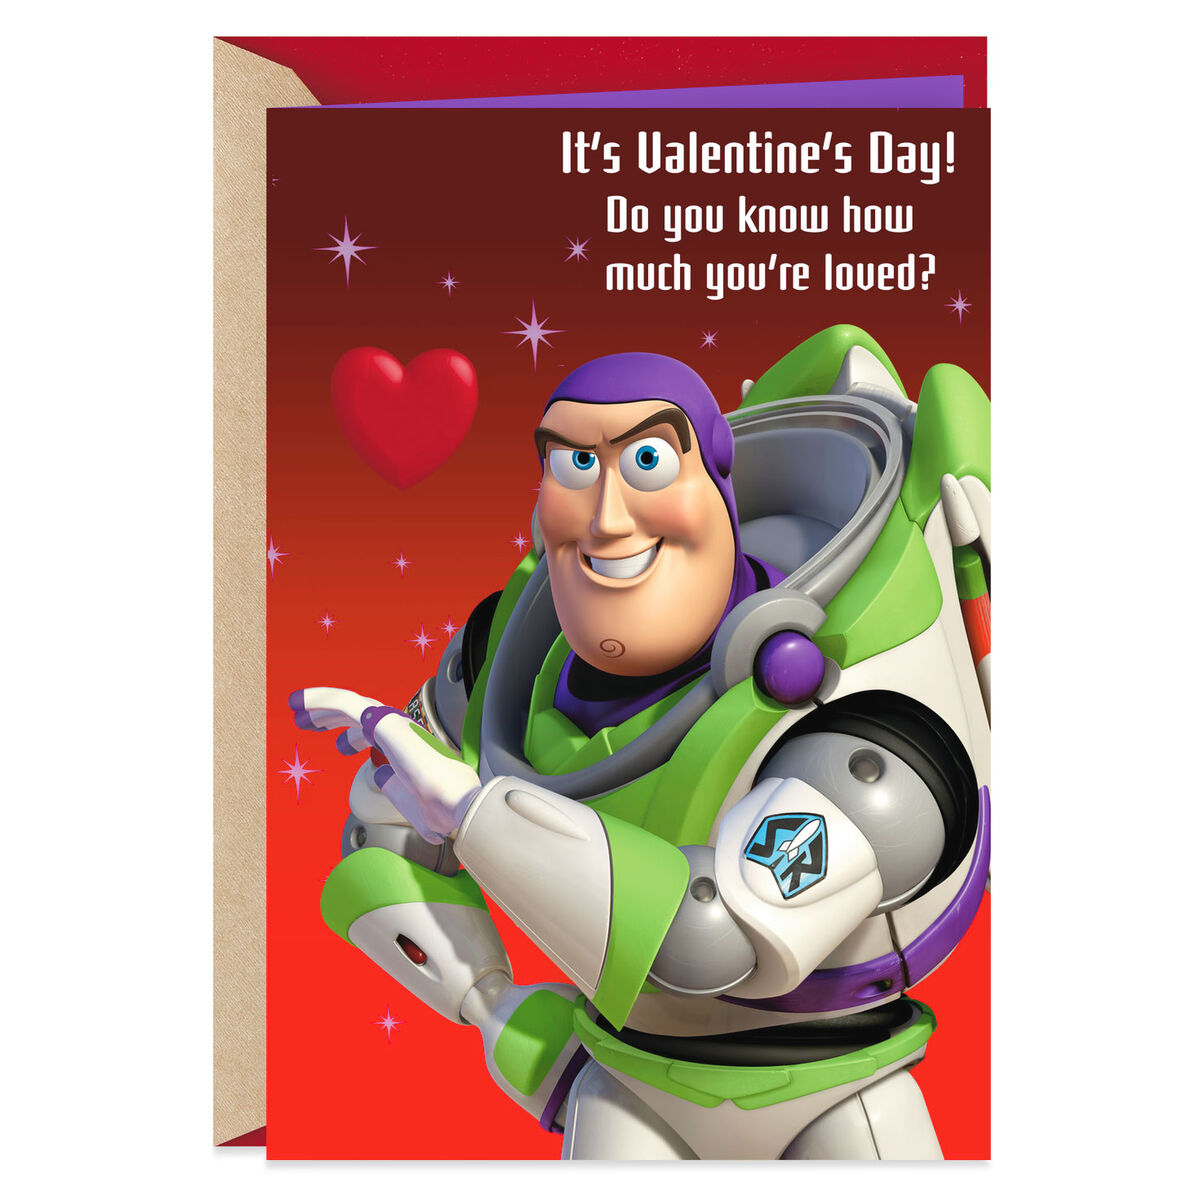 Disney/Pixar Toy Story Buzz Lightyear You're Loved Valentine's Day Card